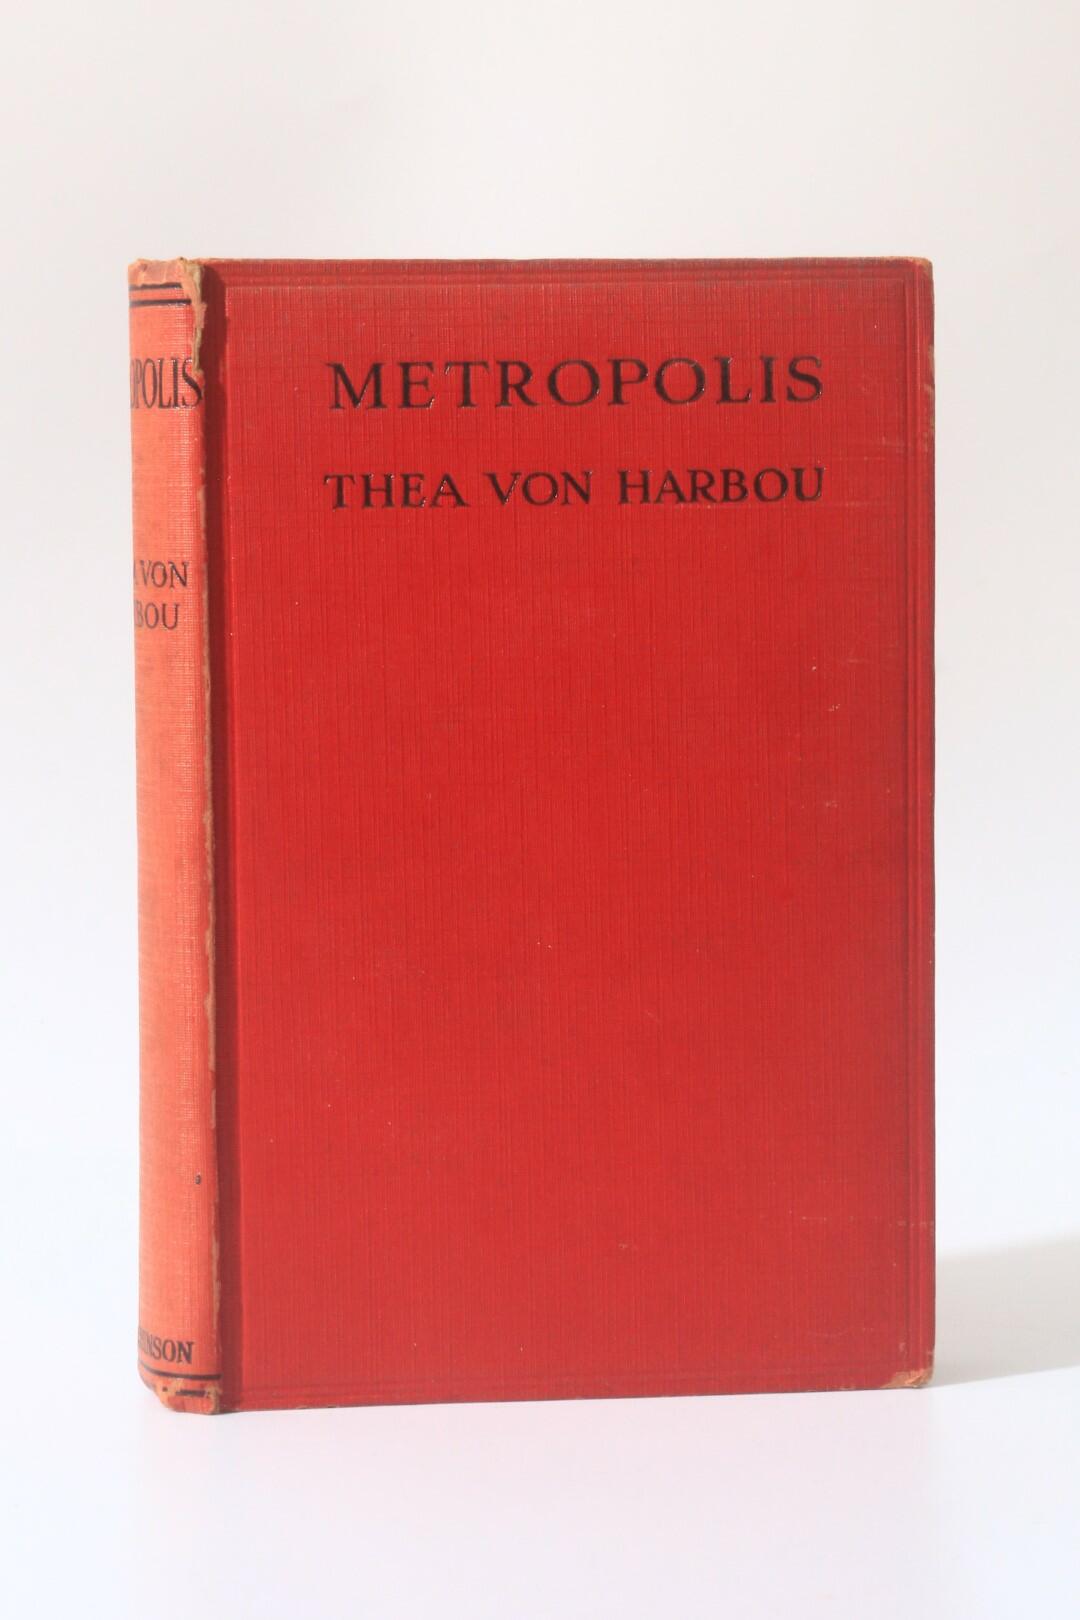 Thea von Harbou - Metropolis - Hutchinson, nd [1927], Second Edition.